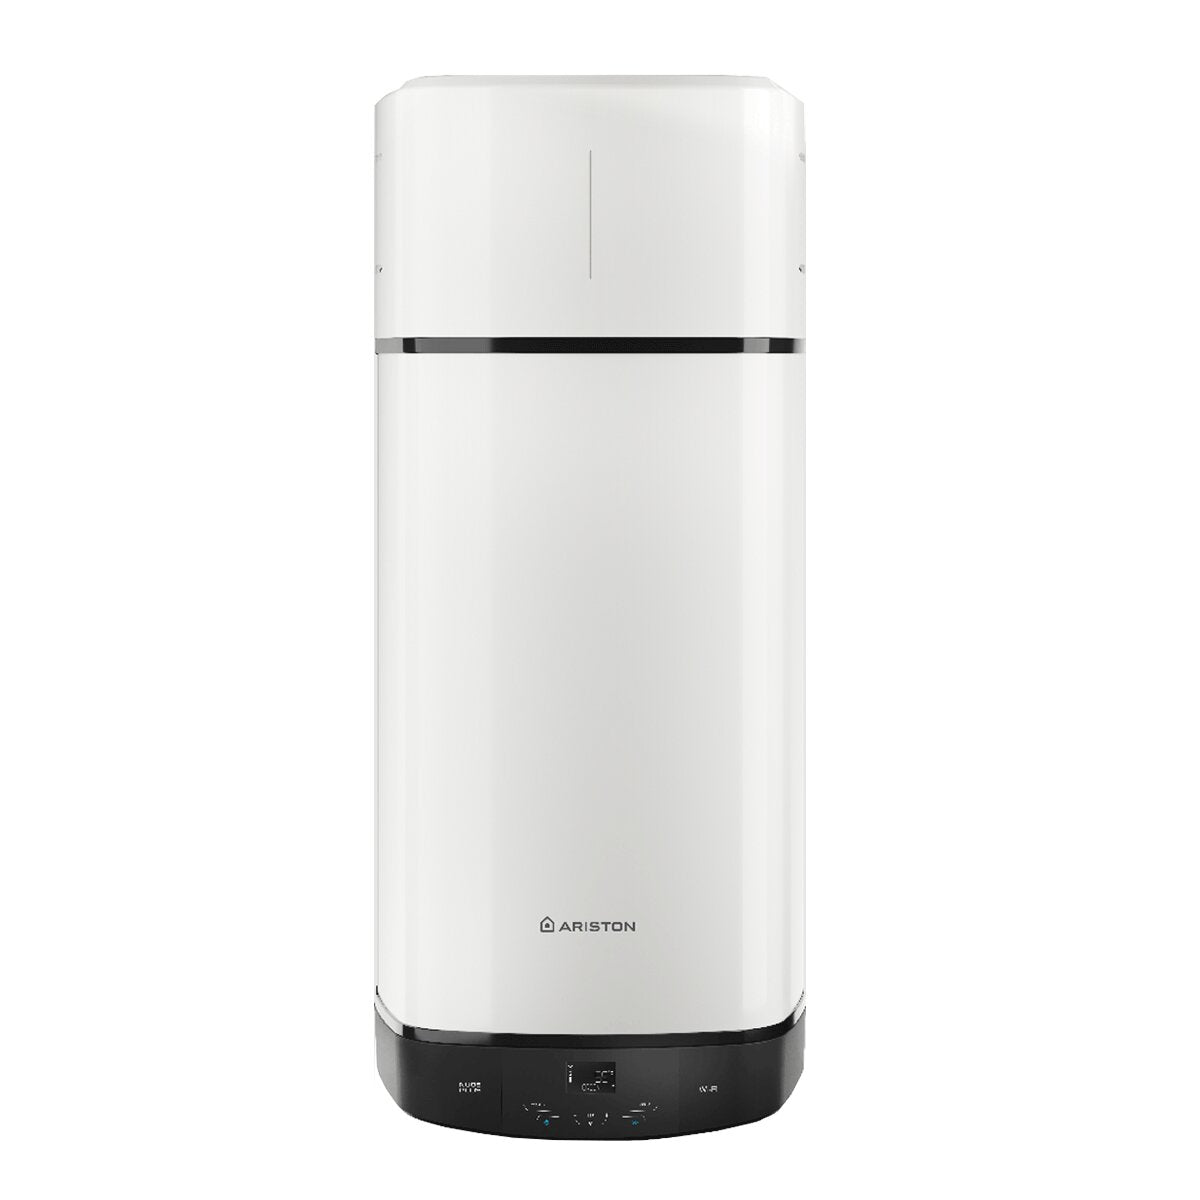 Ariston Nuos Plus R290 S2 WiFi A+ 150 Liter heat pump water heater